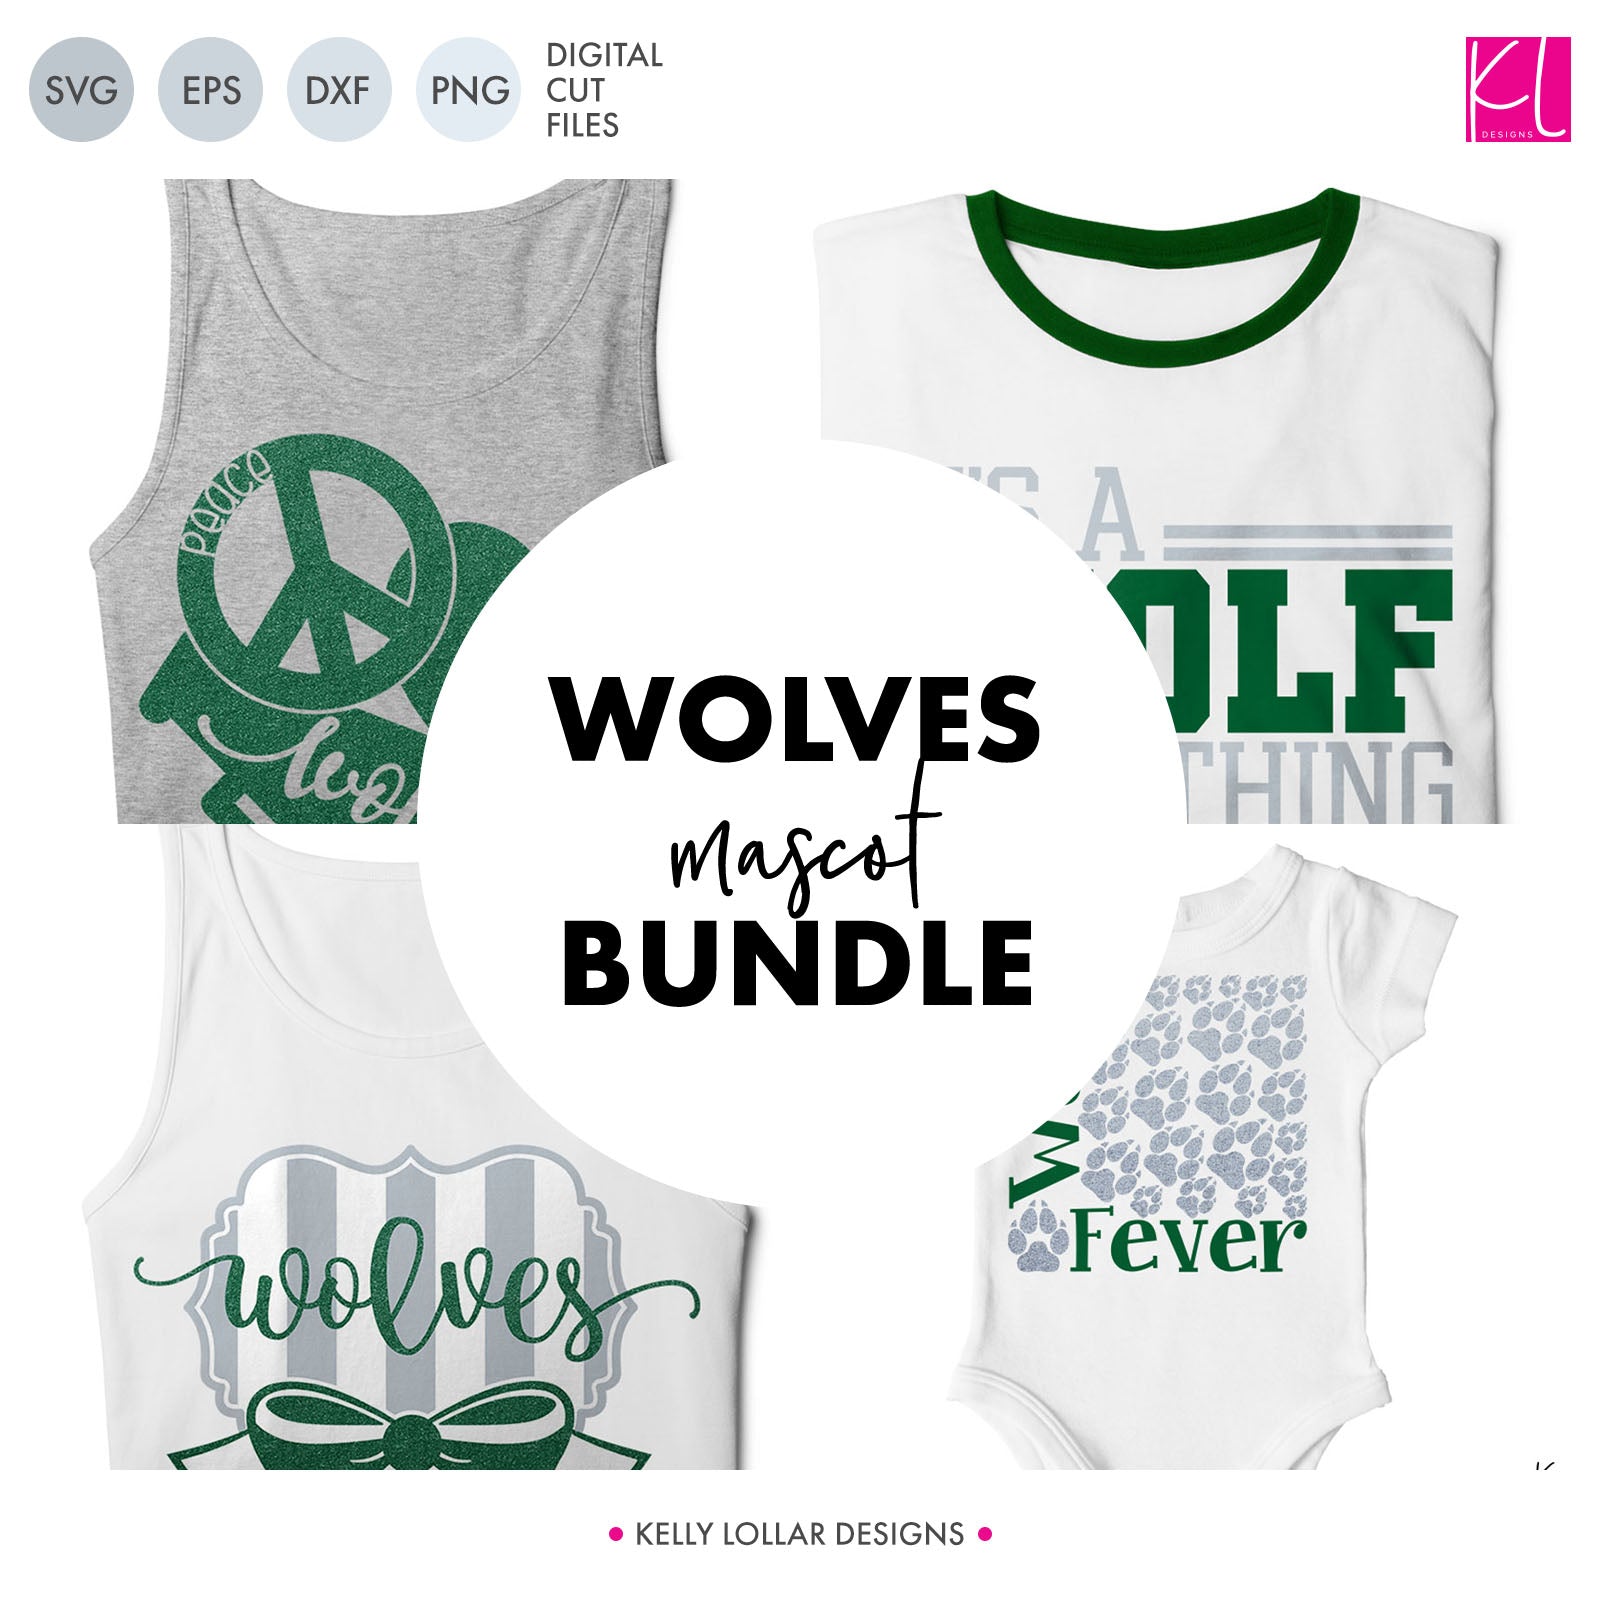 Wolves Mascot Bundle Svg Dxf Eps Png Cut Files Kelly Lollar Designs